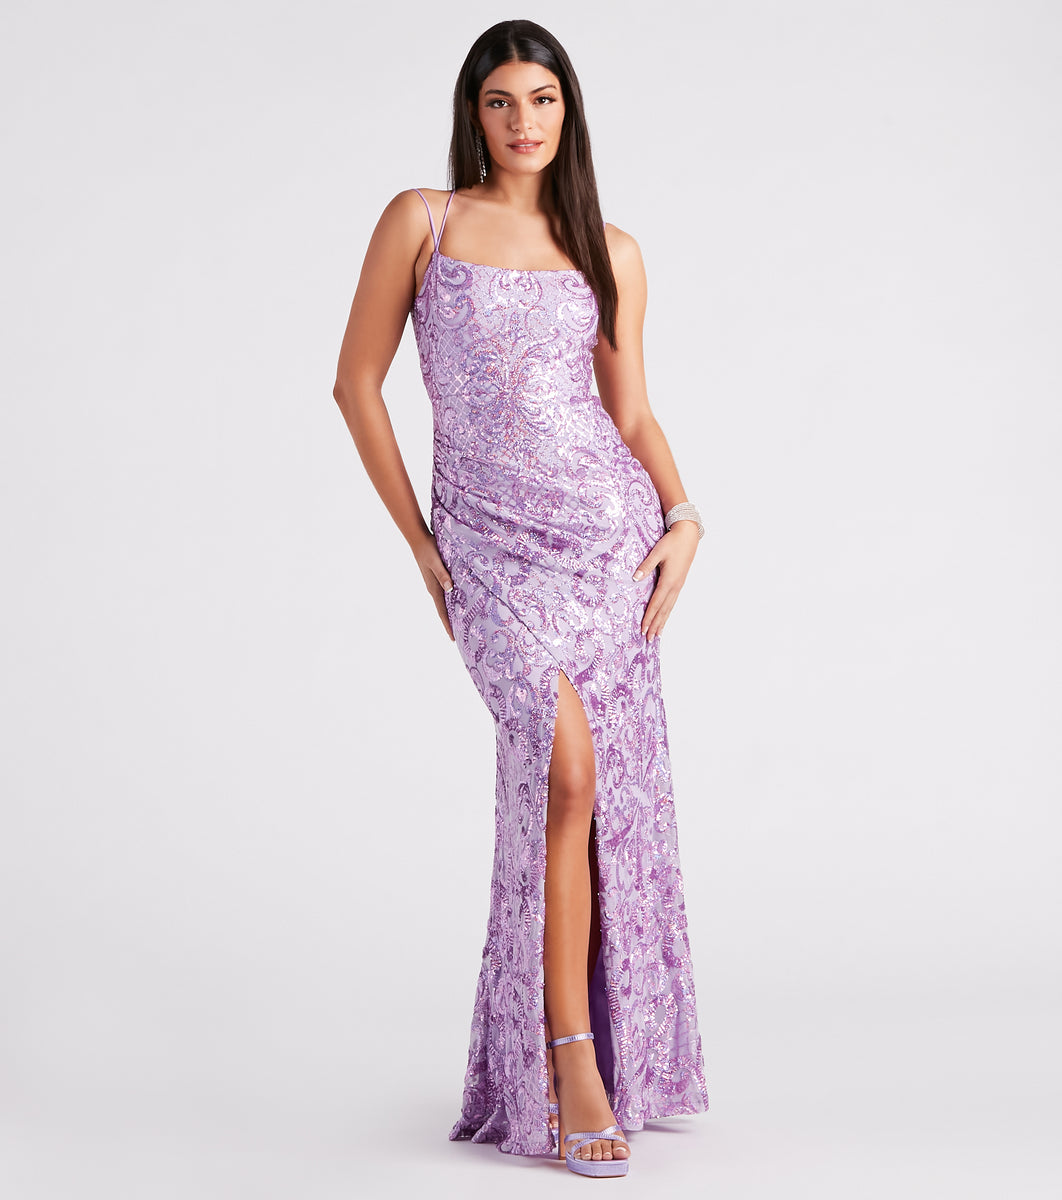 Violet Formal Glitter Sequin Mermaid Dress